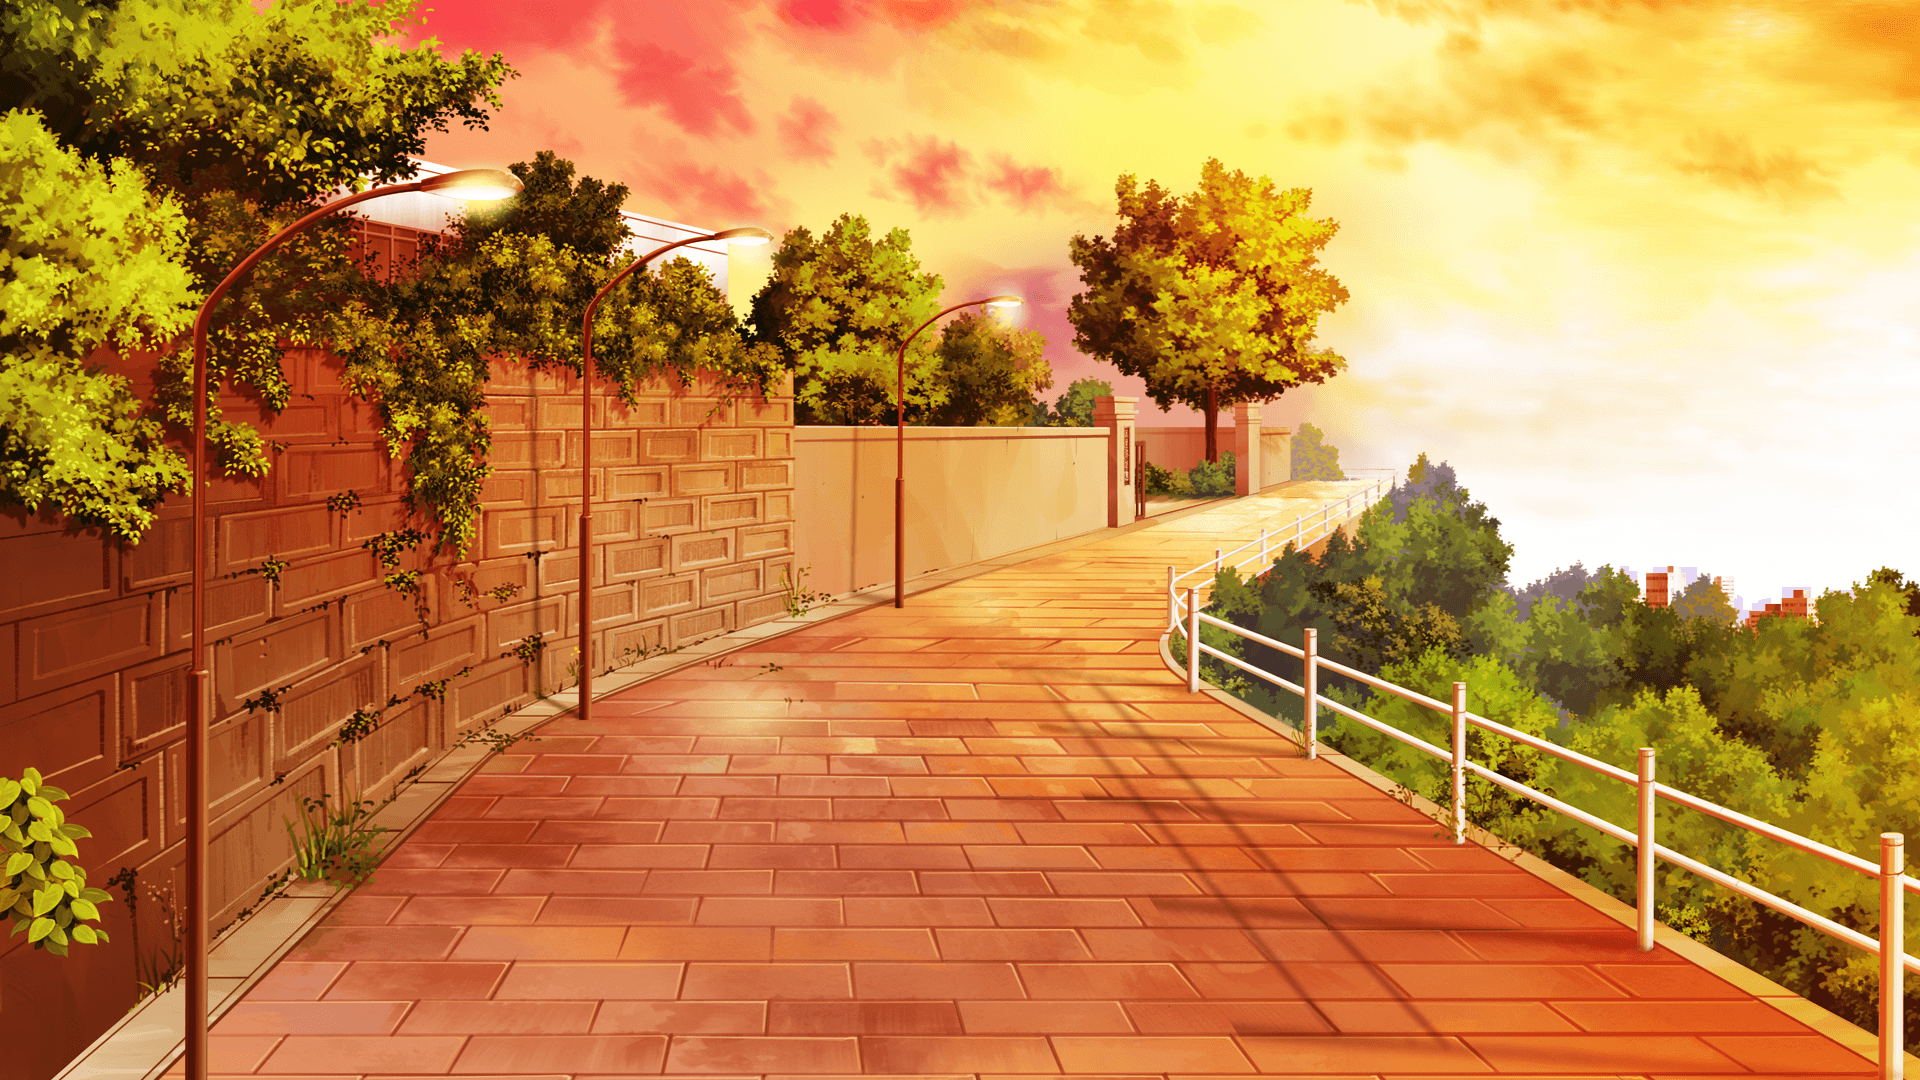 Anime City Scenery Anime Hd Wallpaper 1920x1080.png 1920×1080